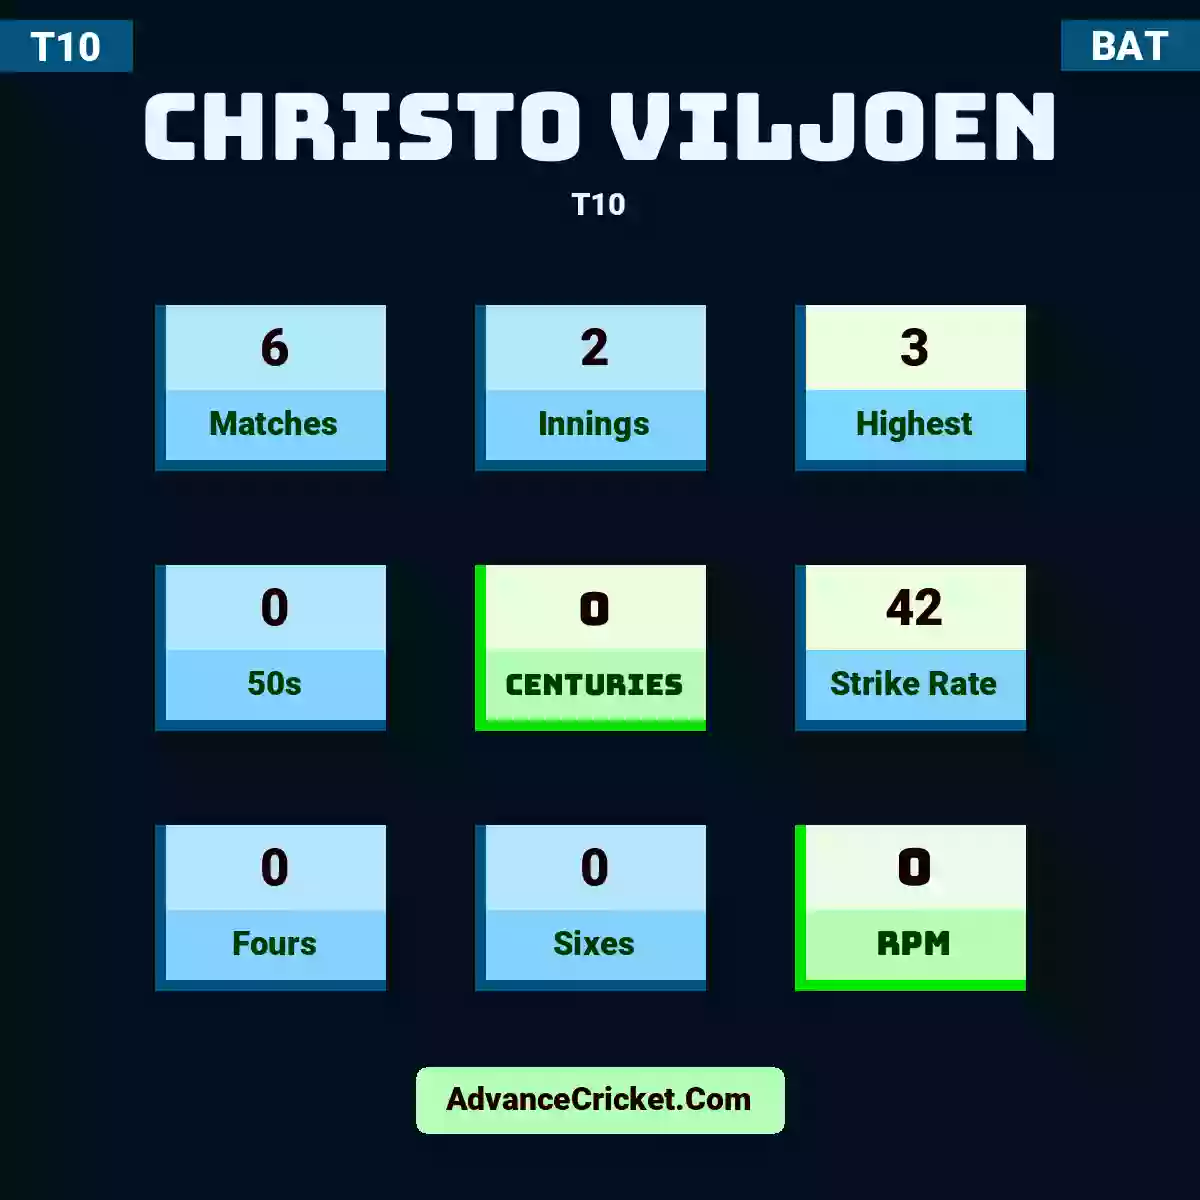 Christo Viljoen T10 , Christo Viljoen played 6 matches, scored 3 runs as highest, 0 half-centuries, and 0 centuries, with a strike rate of 42. C.Viljoen hit 0 fours and 0 sixes, with an RPM of 0.